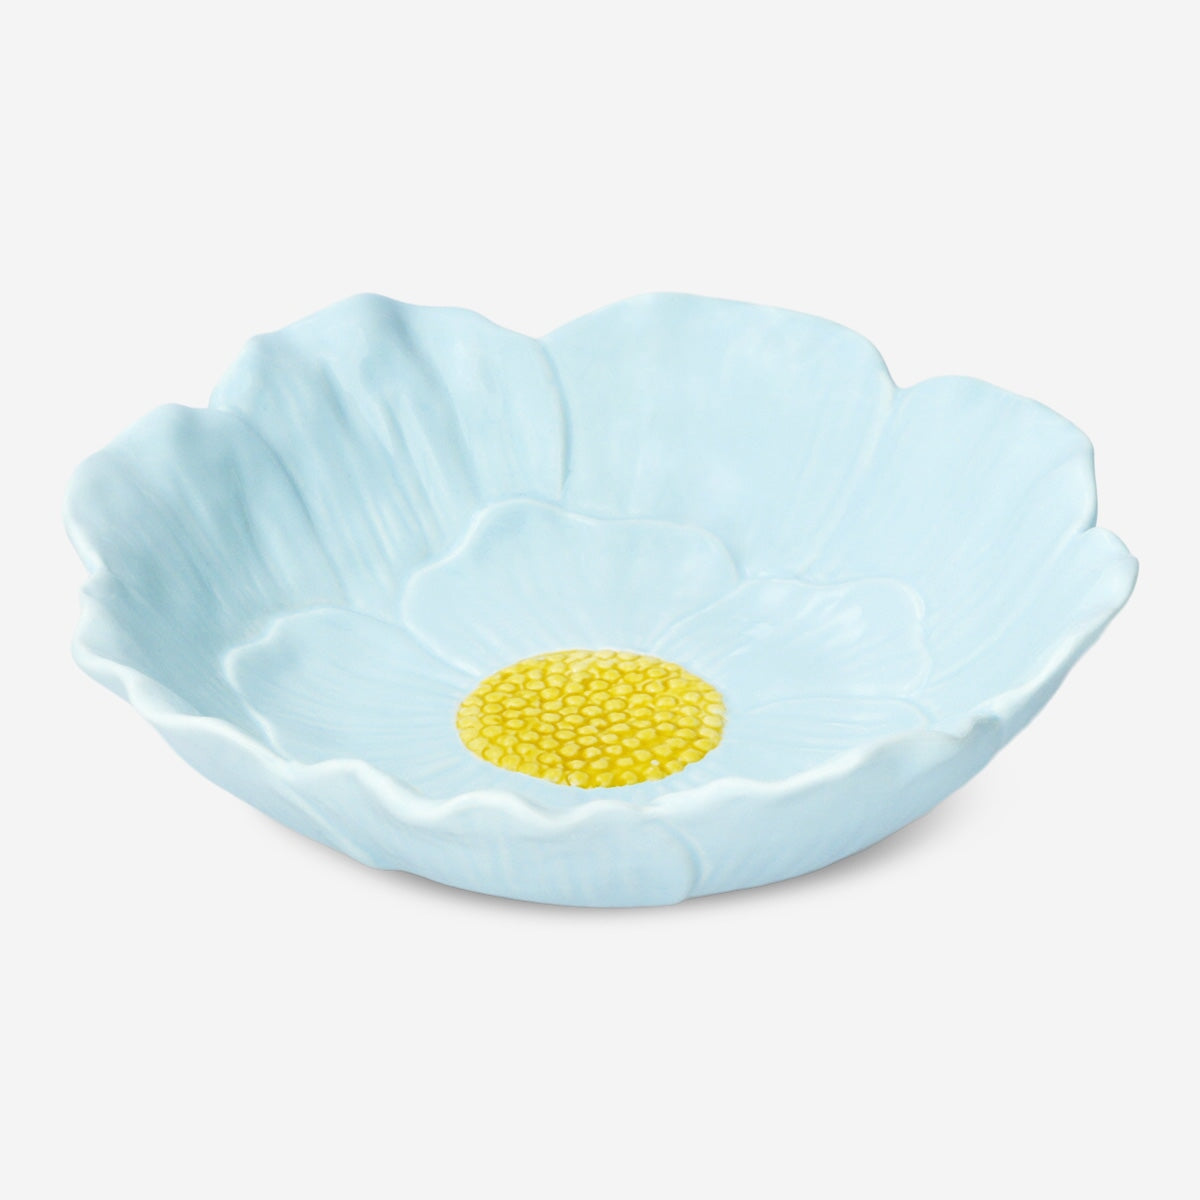 Image of Flower bowl. Large